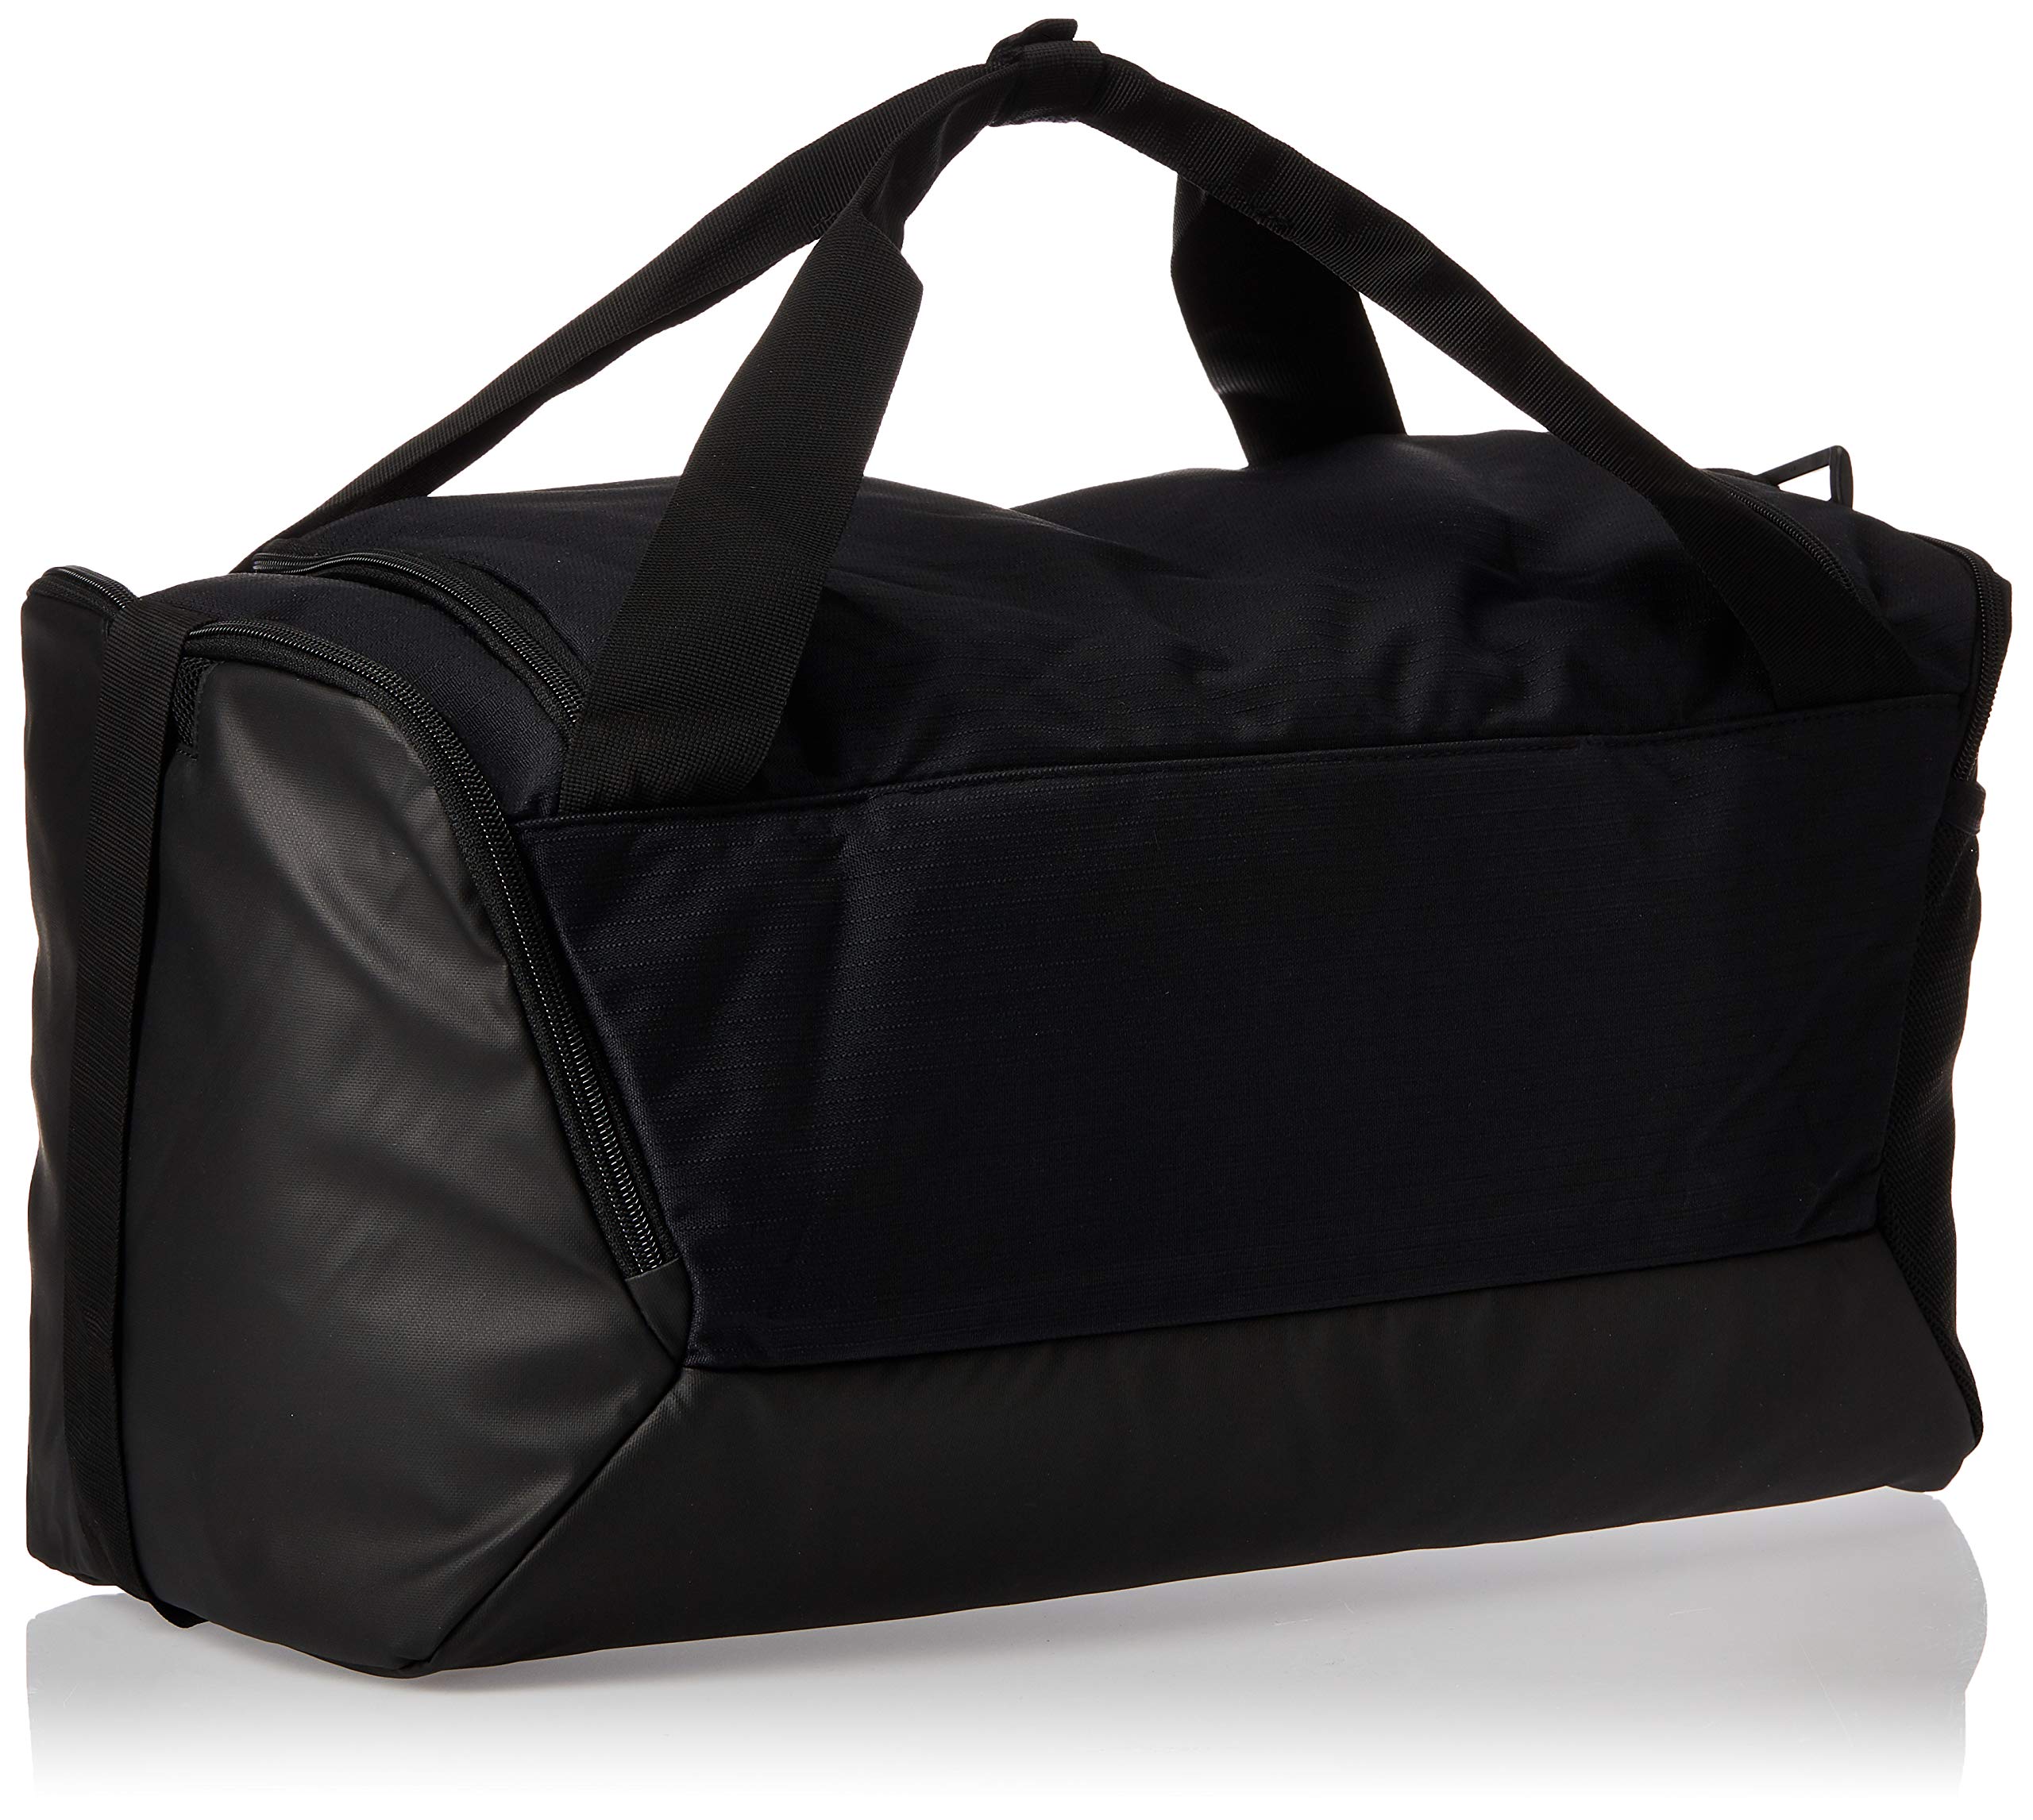 Training Convertible Duffle Bag/Backpack - black - WORKOUT.EU